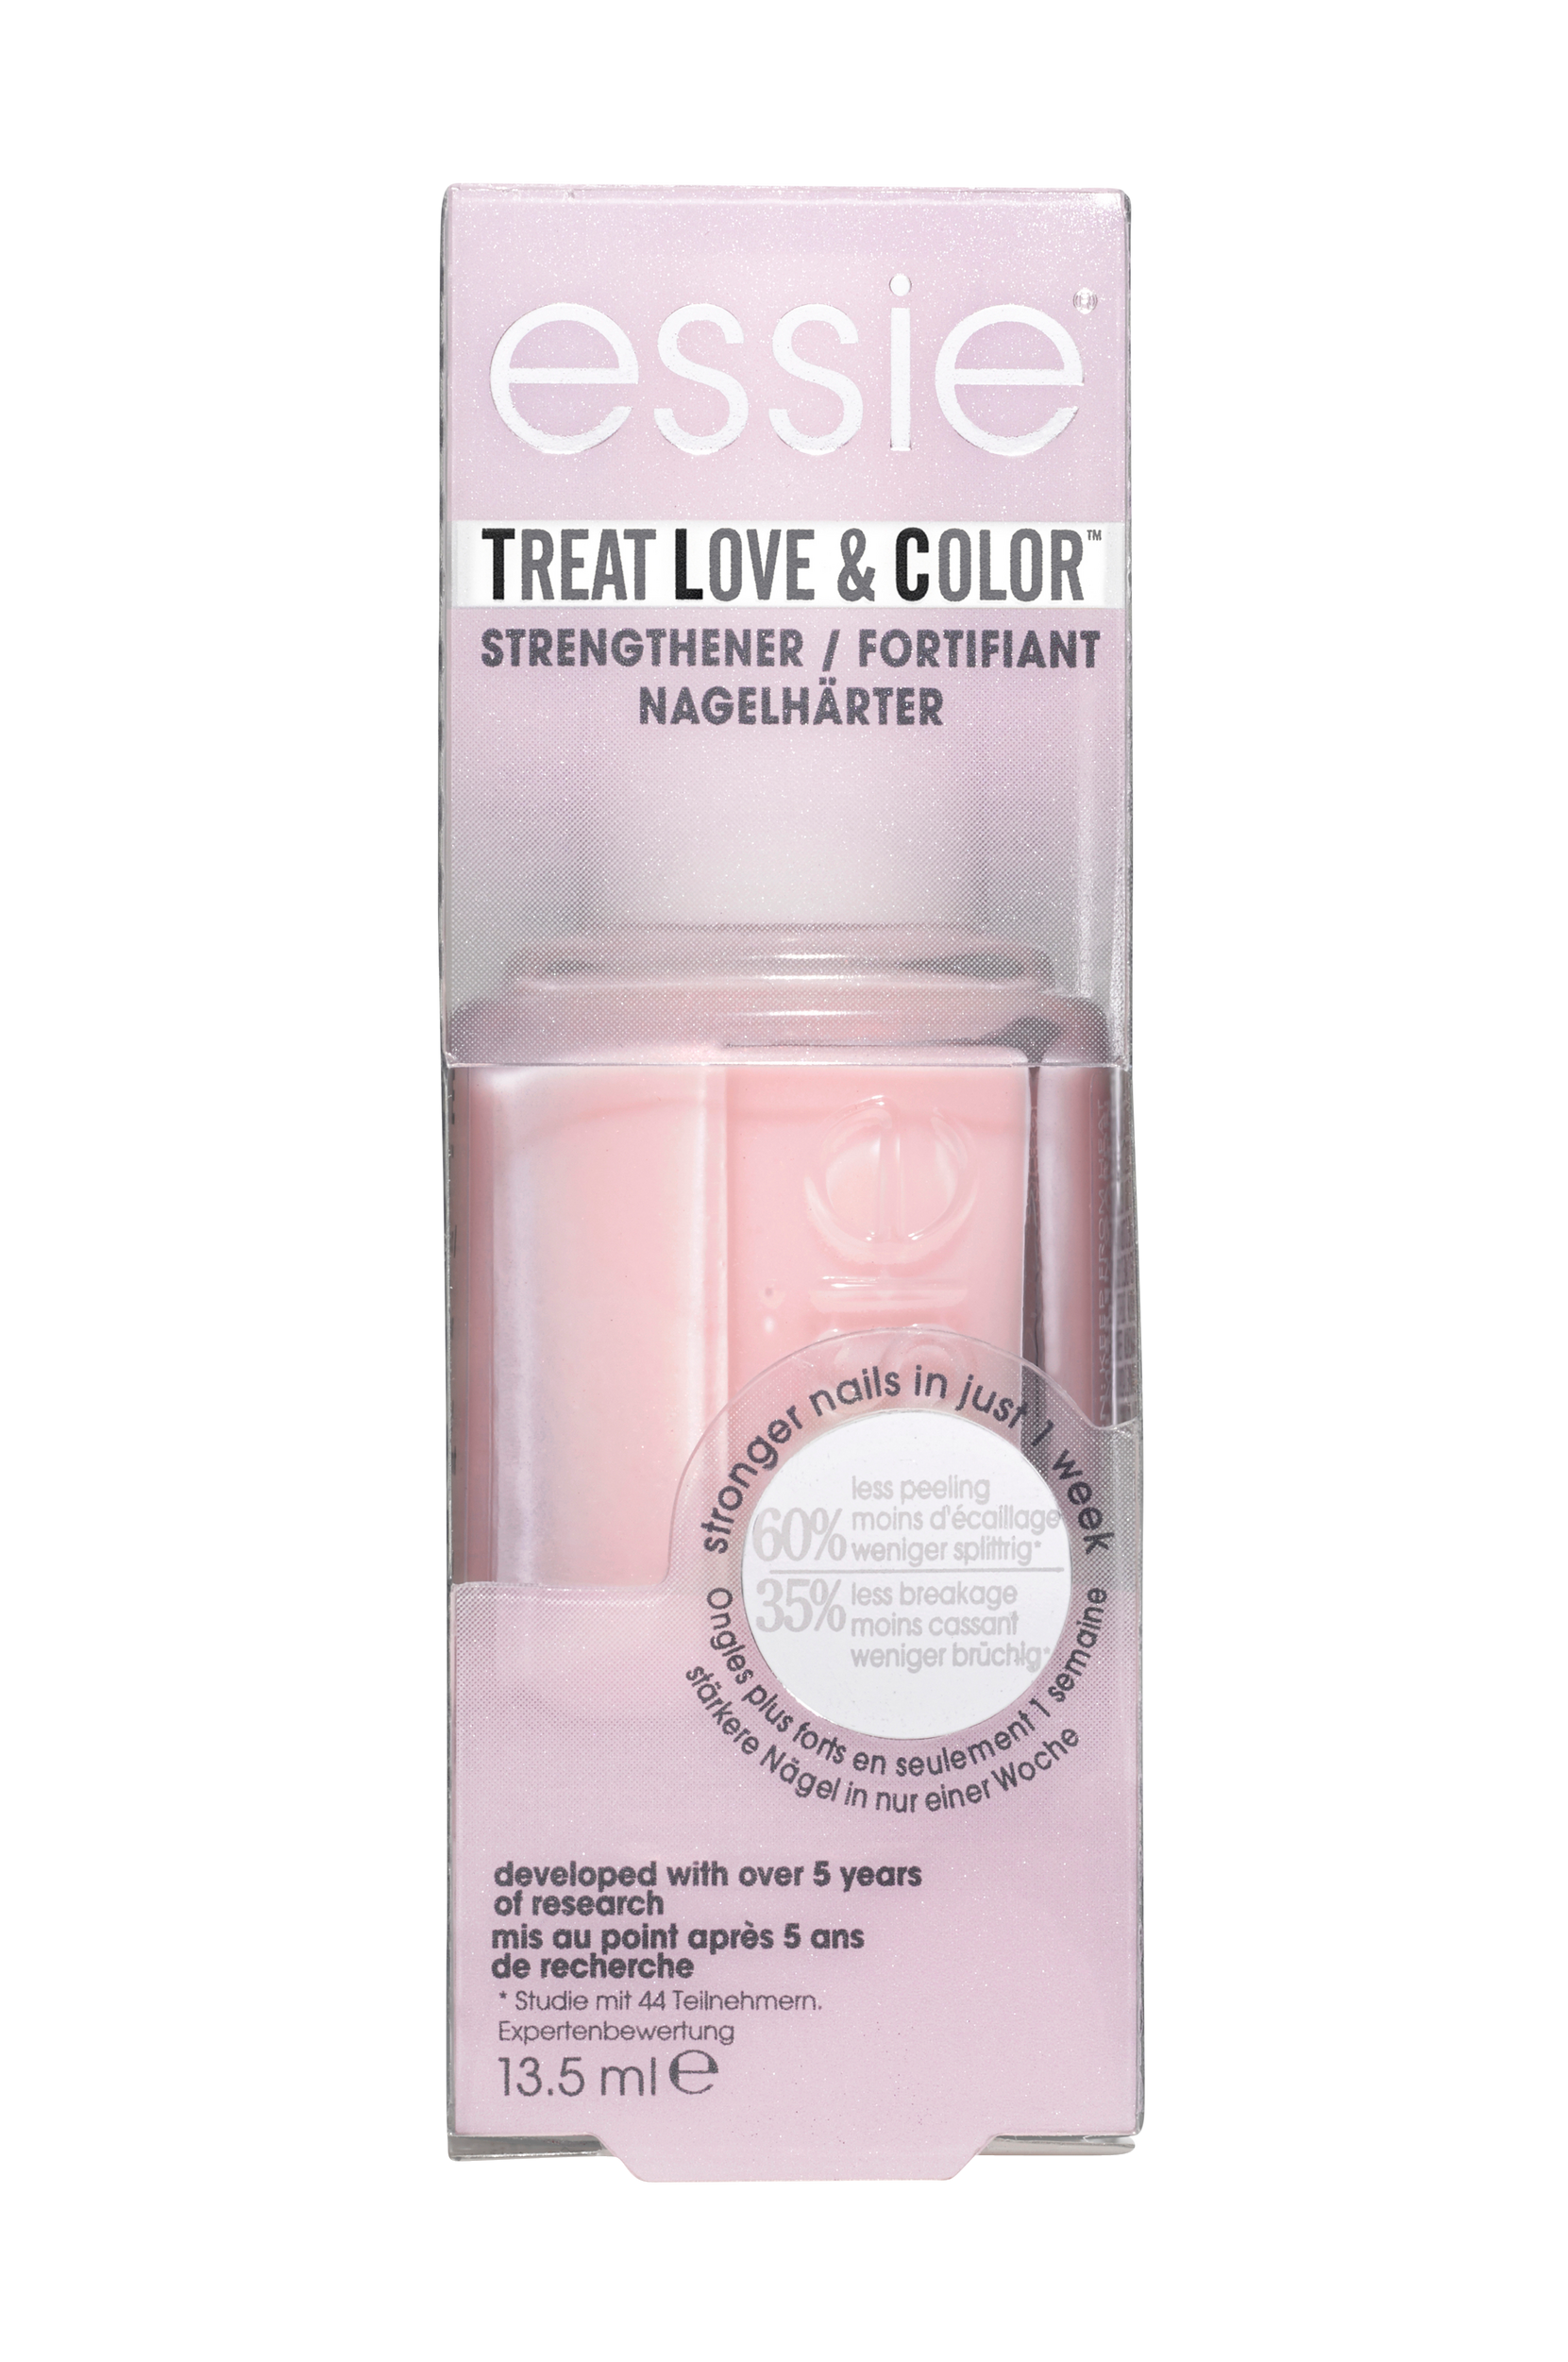 Treat Love & Color Nail Polish, essie